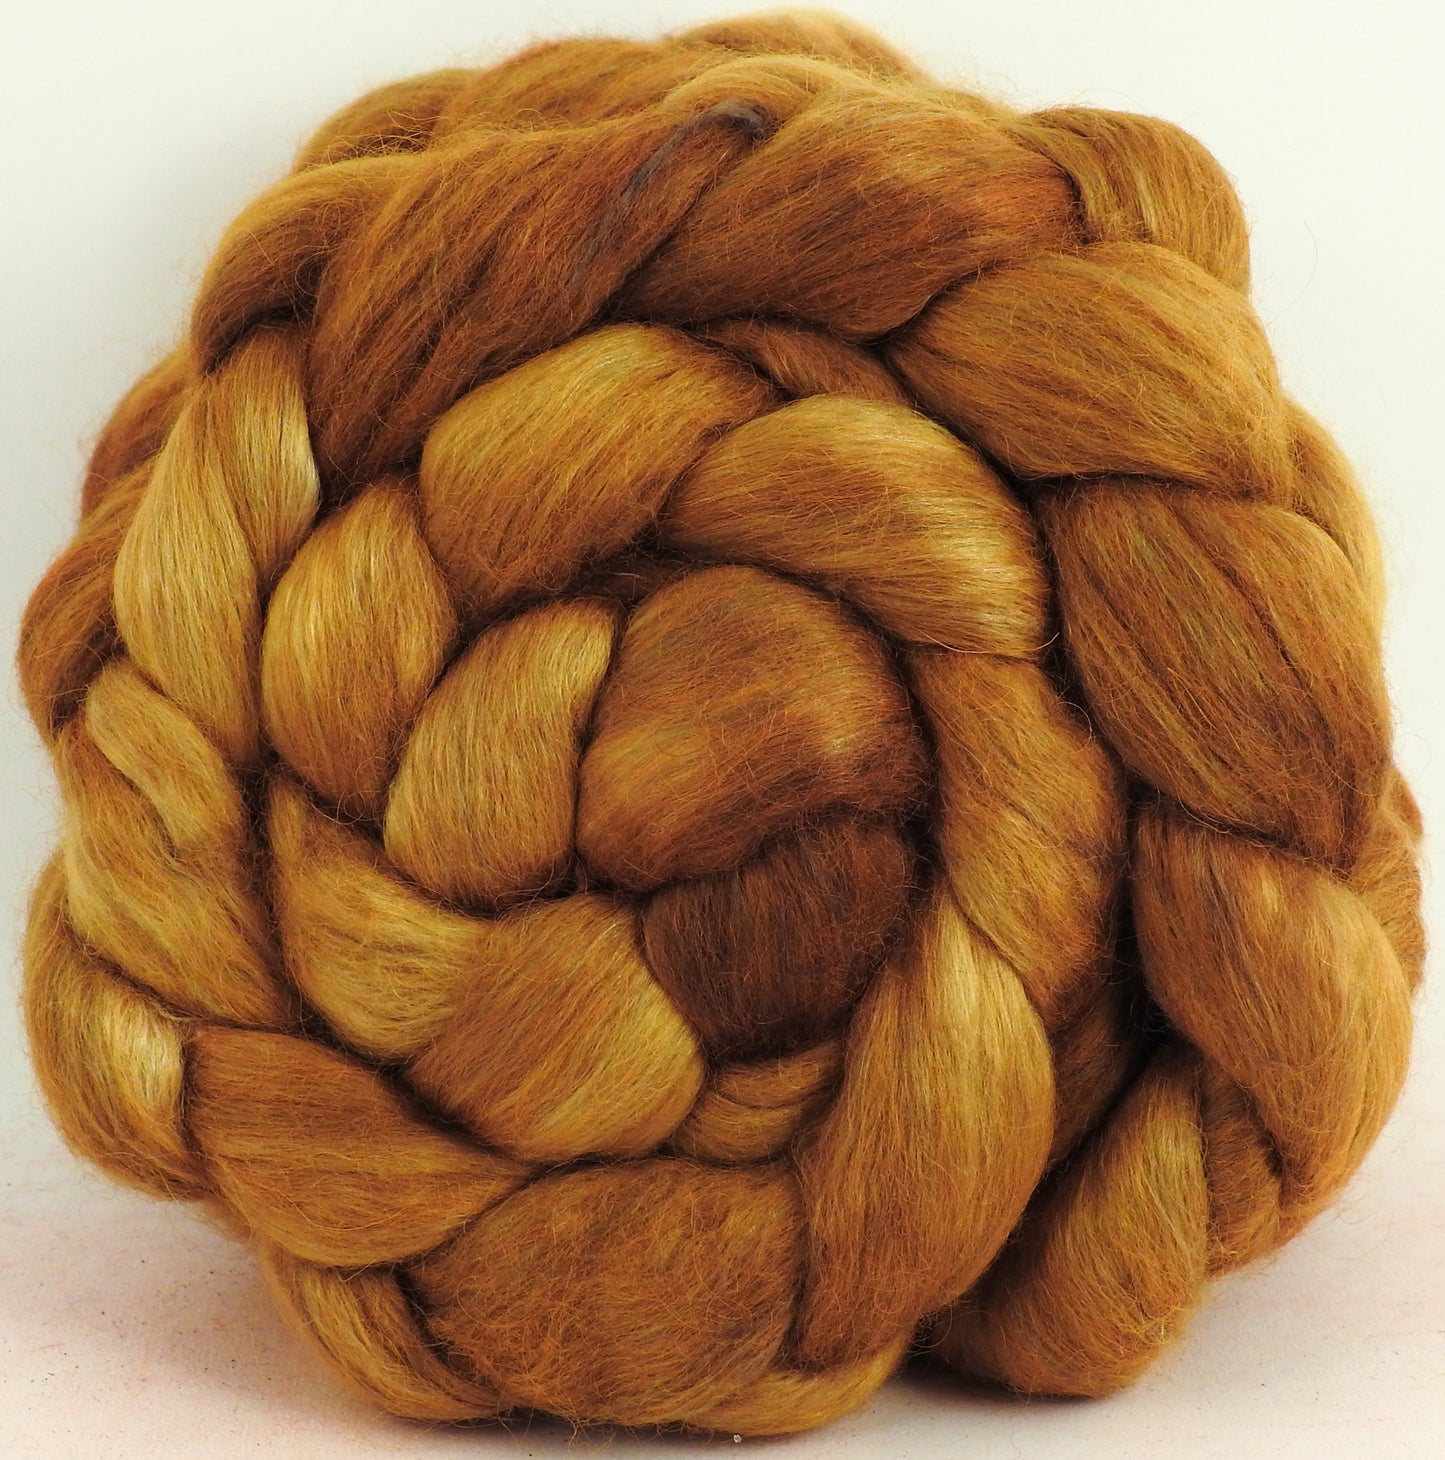 Butterscotch - Batt in a Braid #52- Wensleydale/ Mulberry silk/ Polwarth (60/25/15)